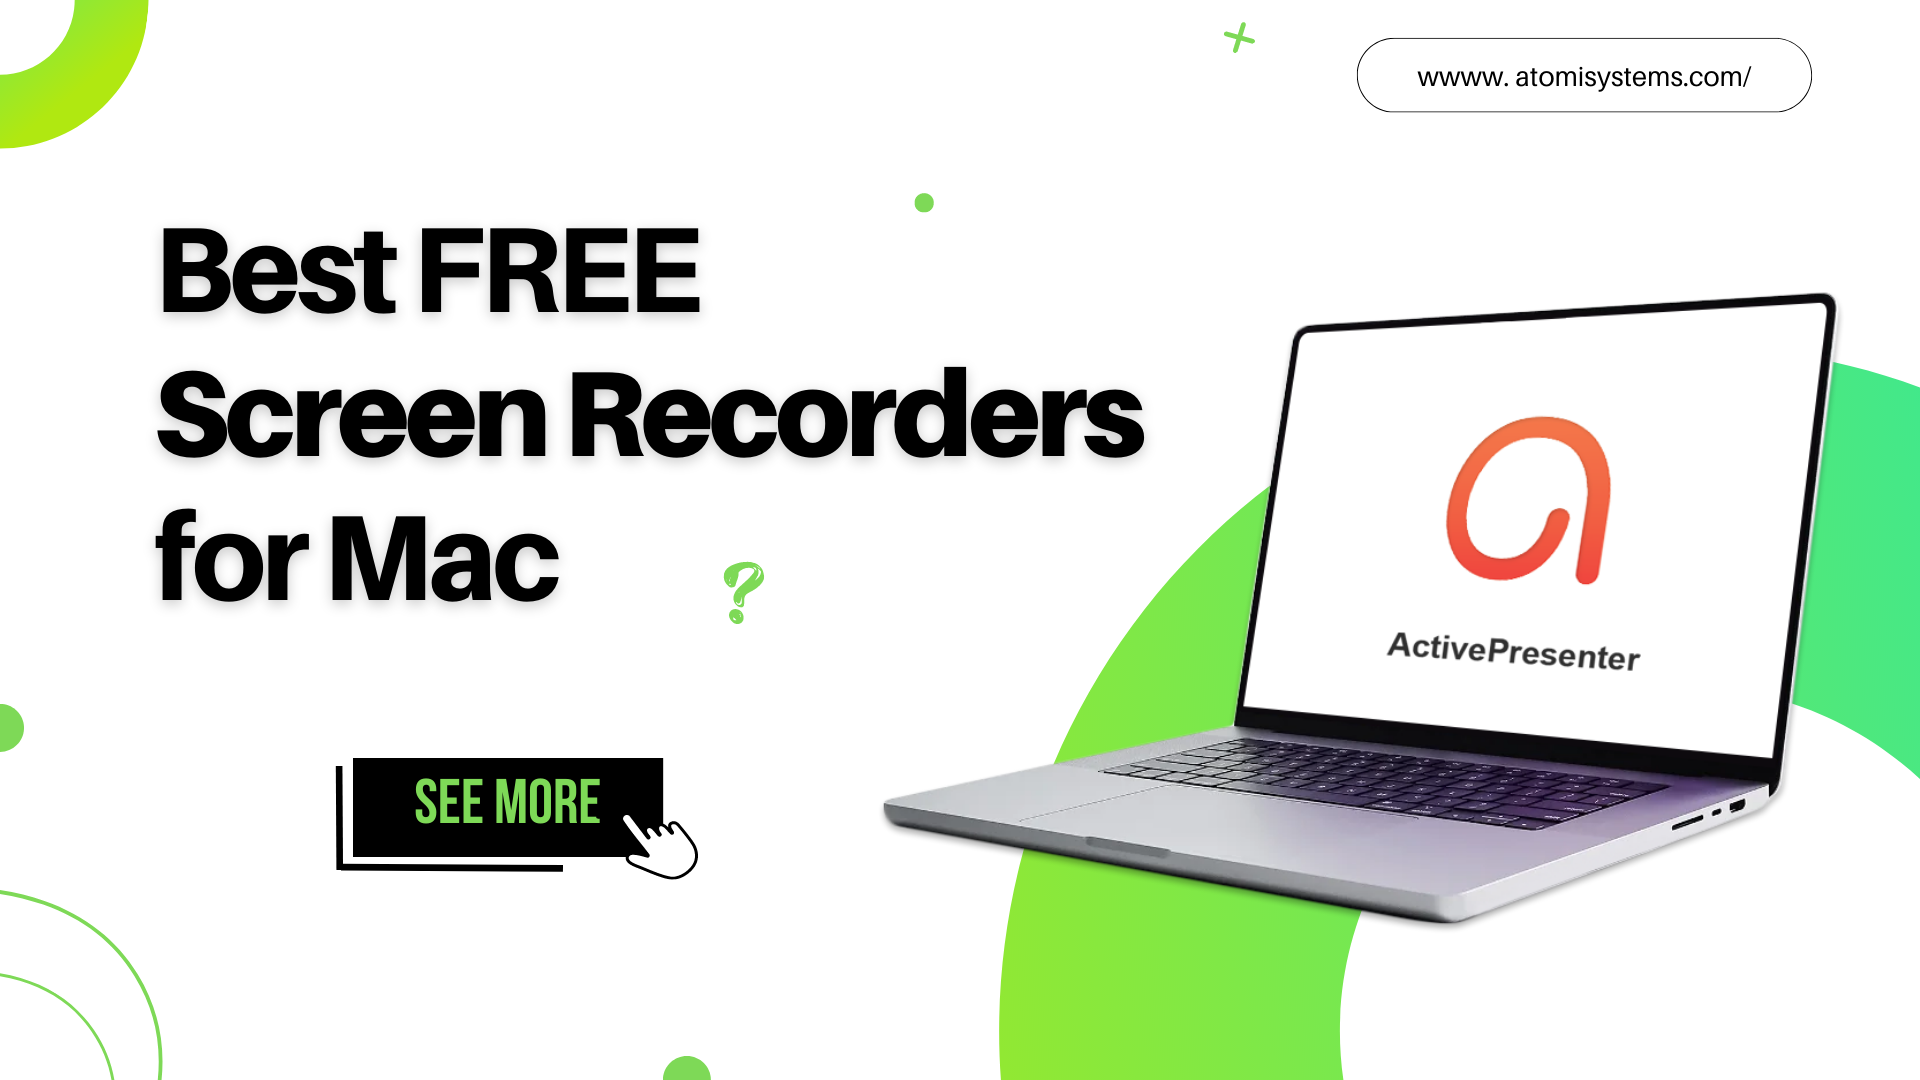 Free screen recorders for mac reddit best mac torrent client